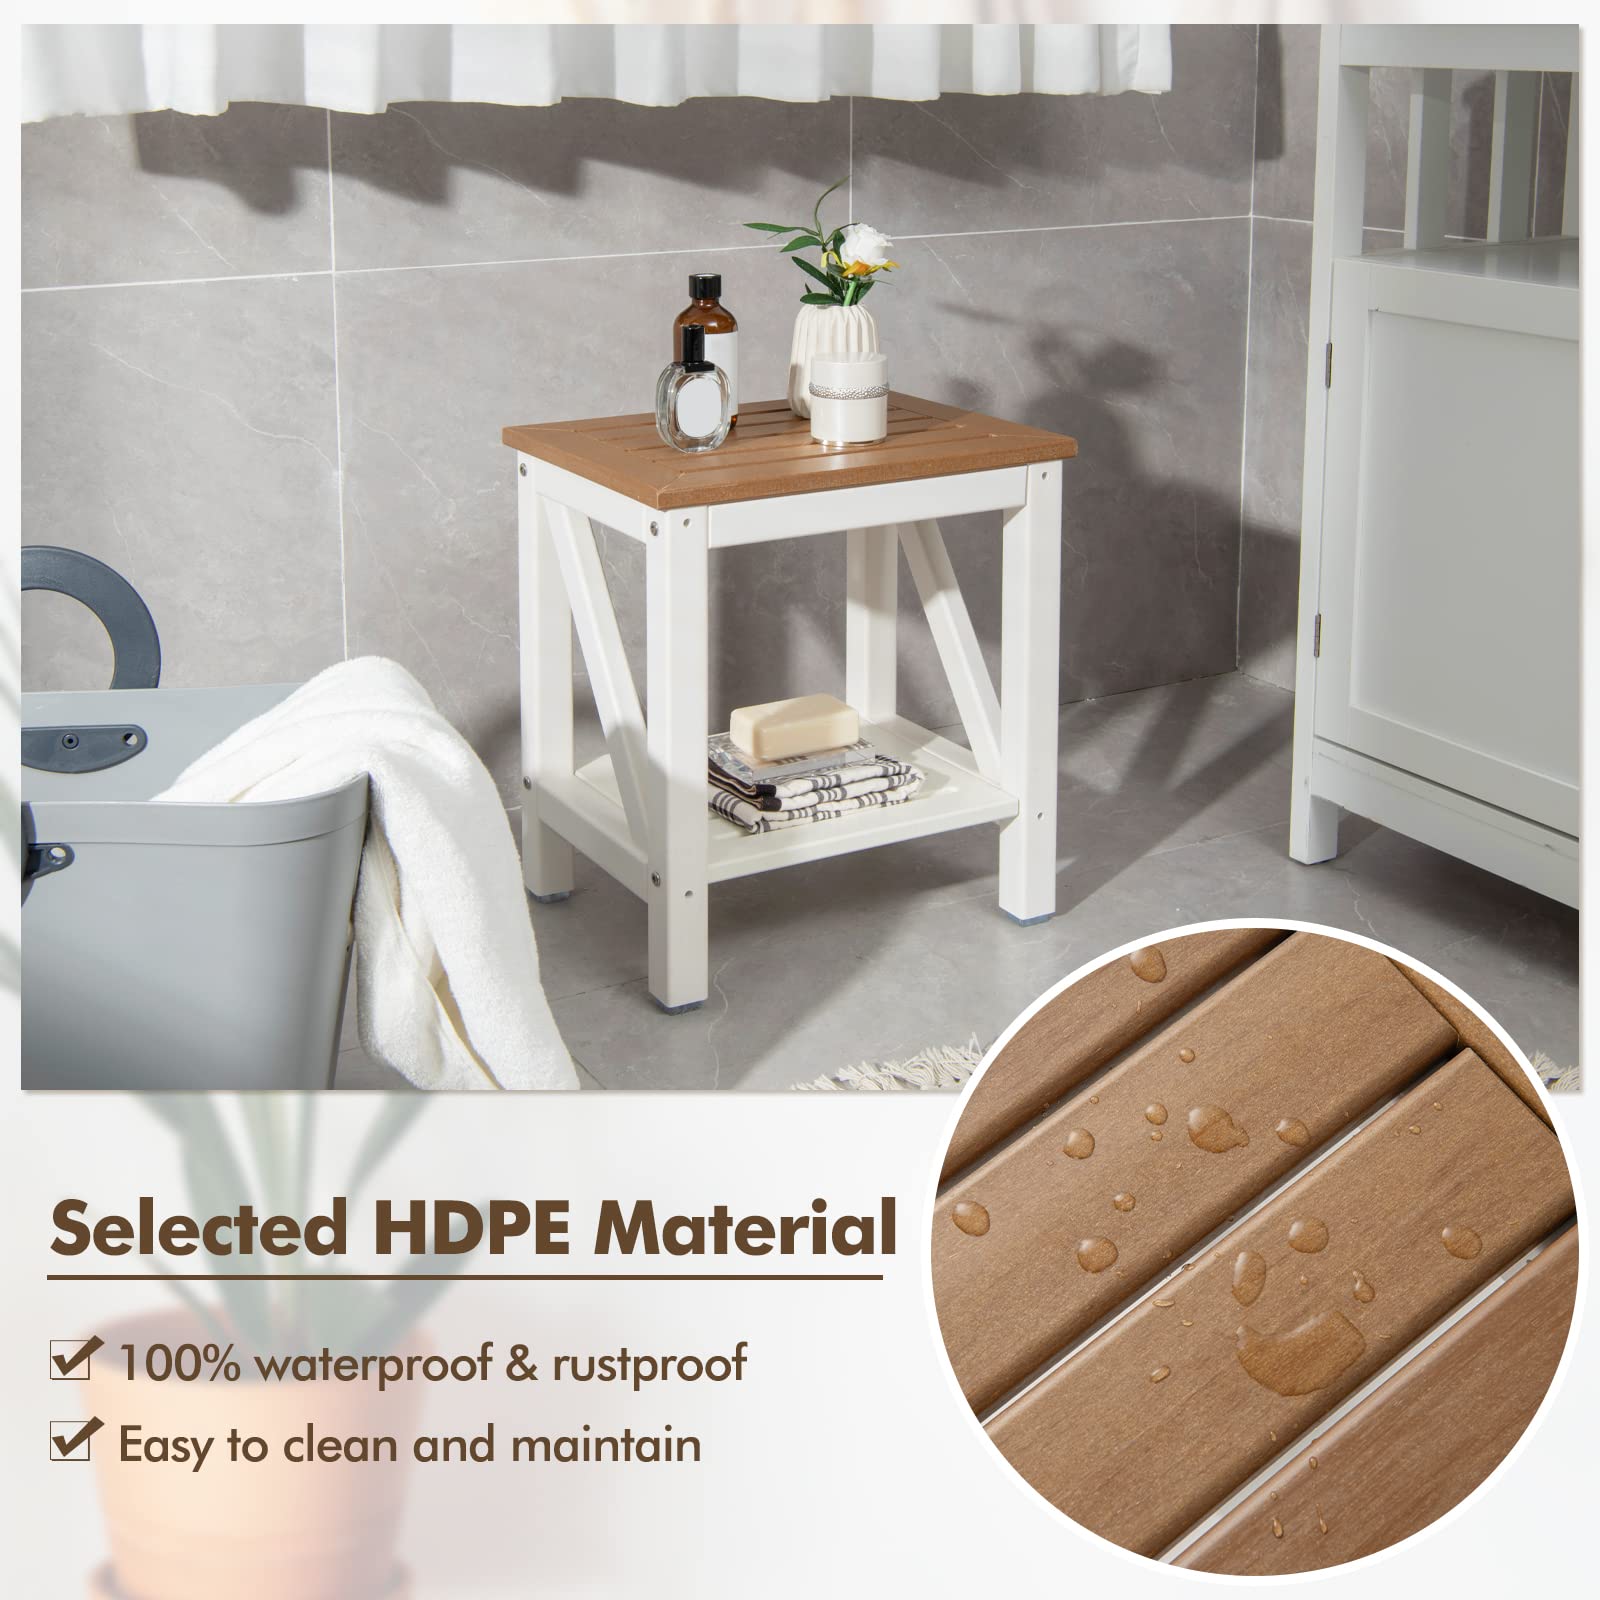 Giantex Shower Bench Waterproof HDPE - Shower Stool with Storage Shelf, 2-Tier Plastic Spa Bath Step Shower Seat